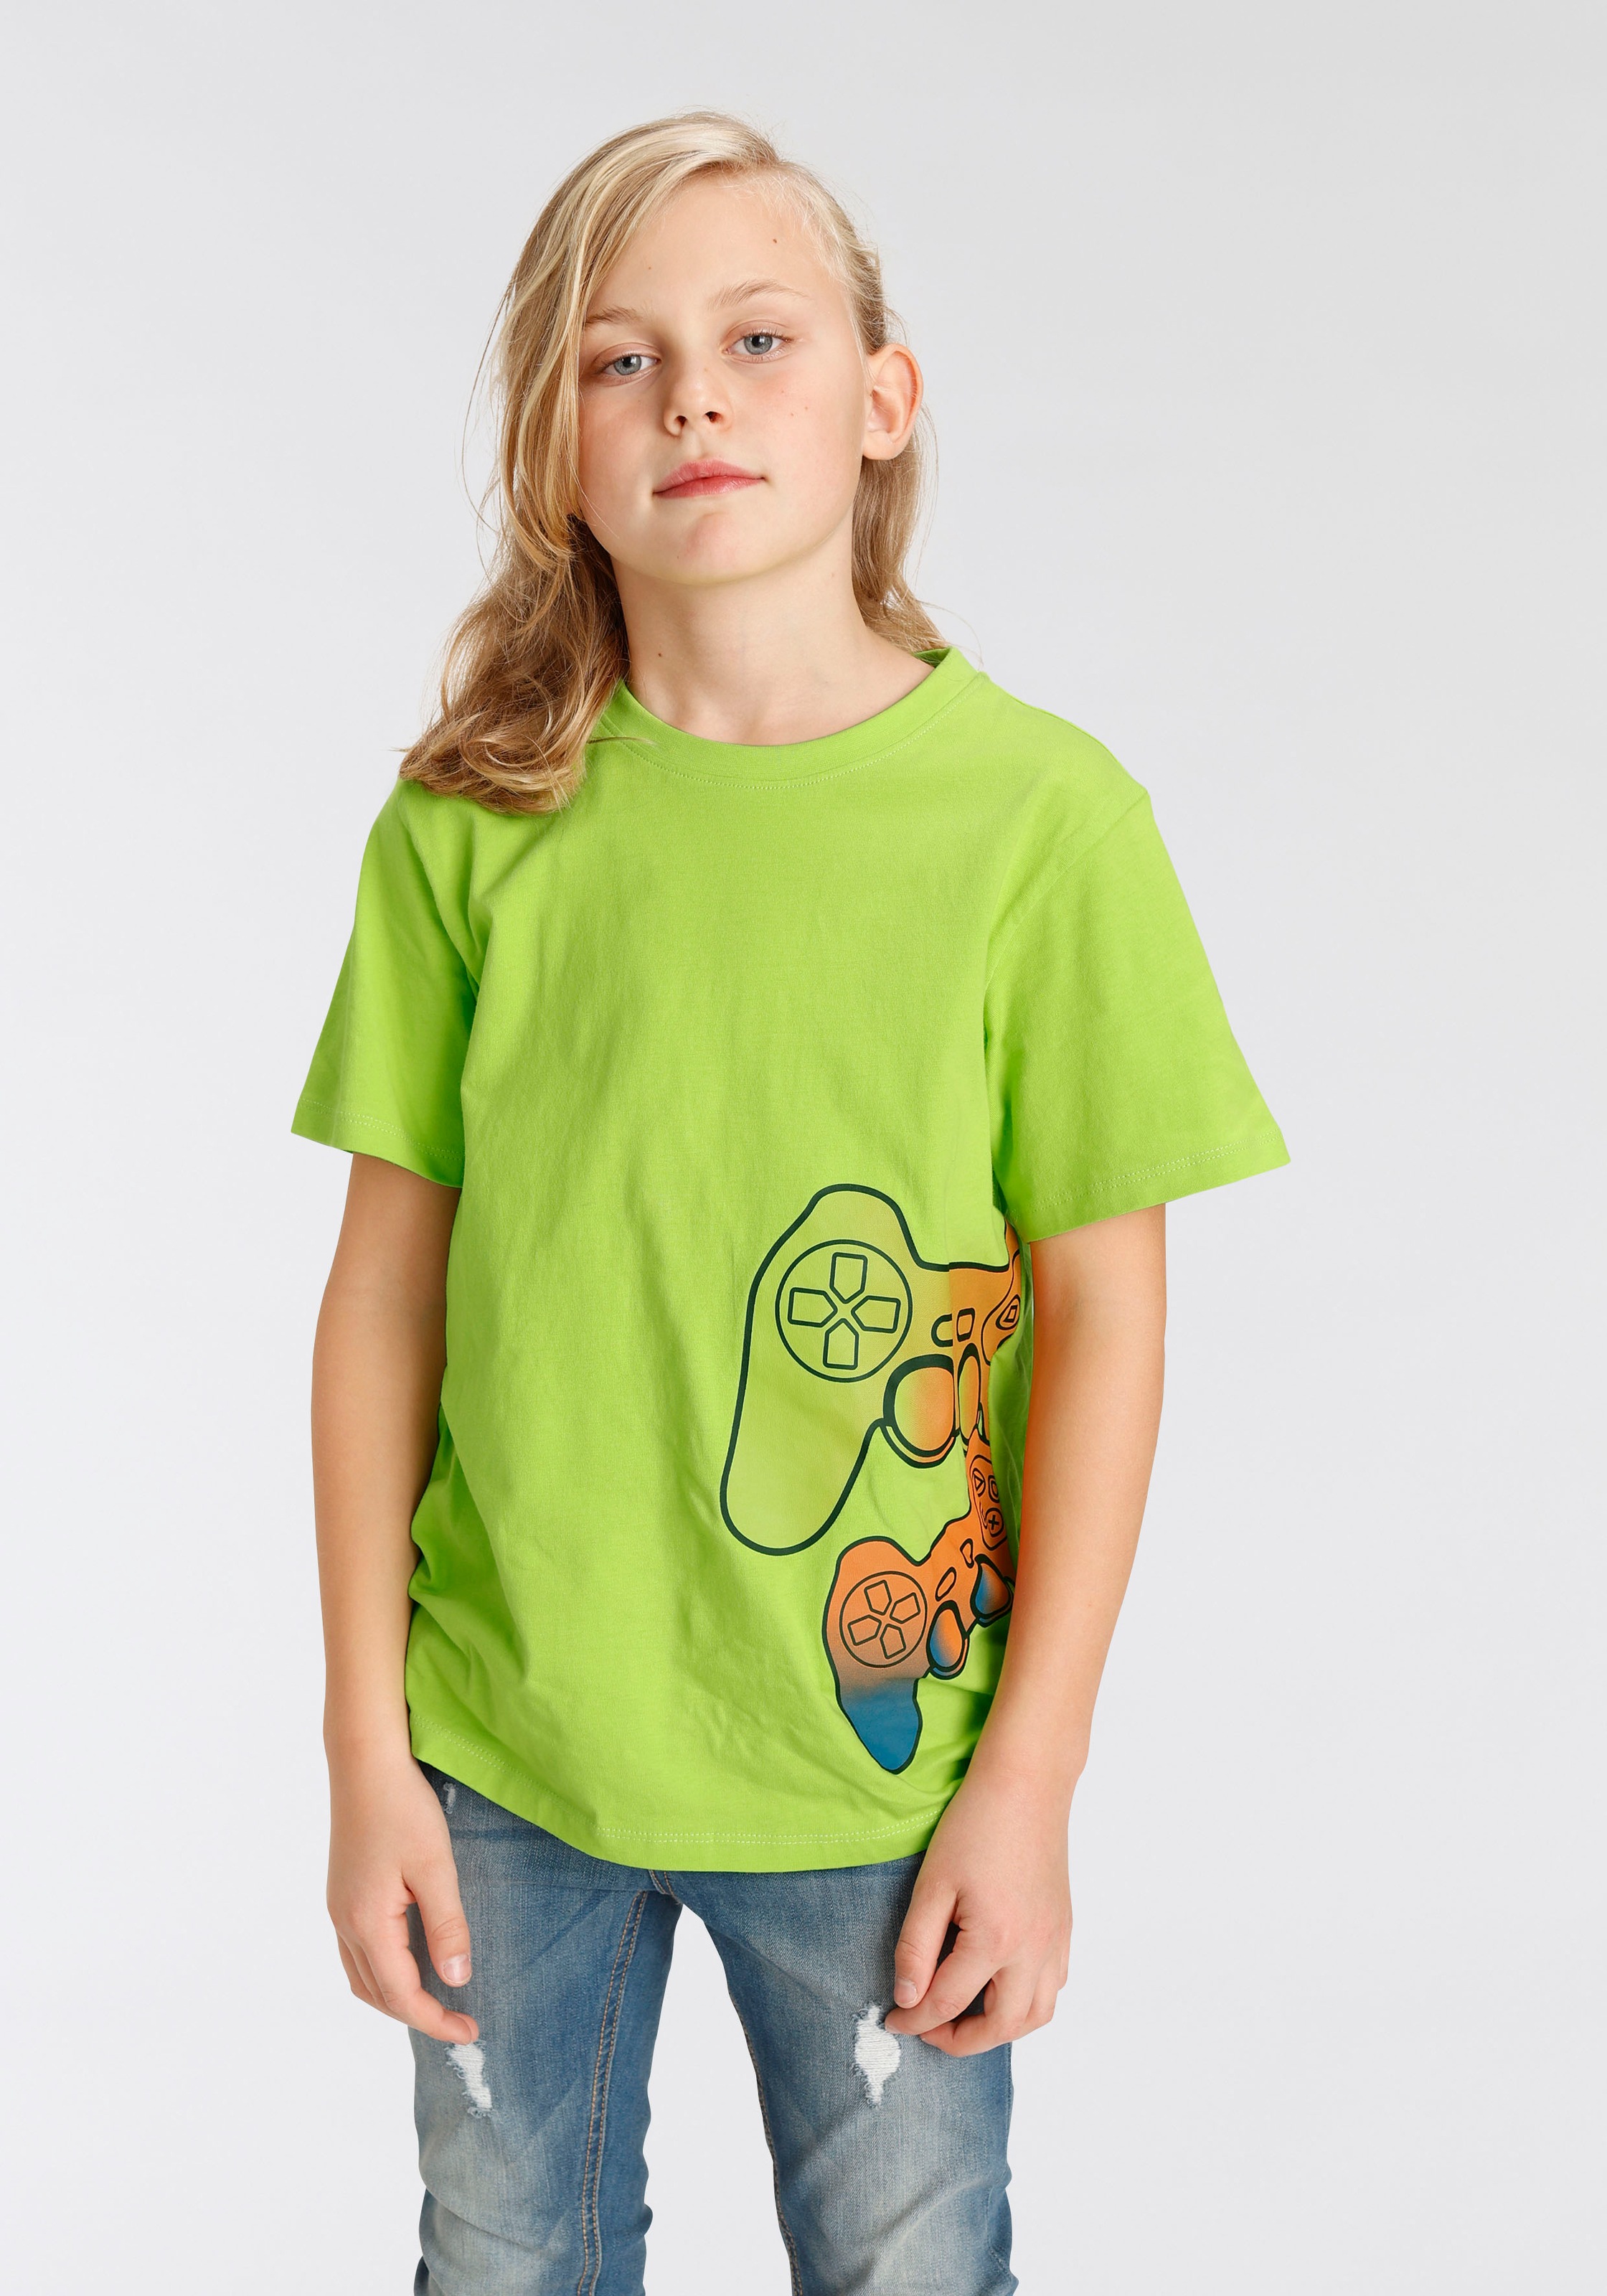 tlg., 2 2er-Pack) T-Shirt (Packung, auf KIDSWORLD »GAMER«, versandkostenfrei